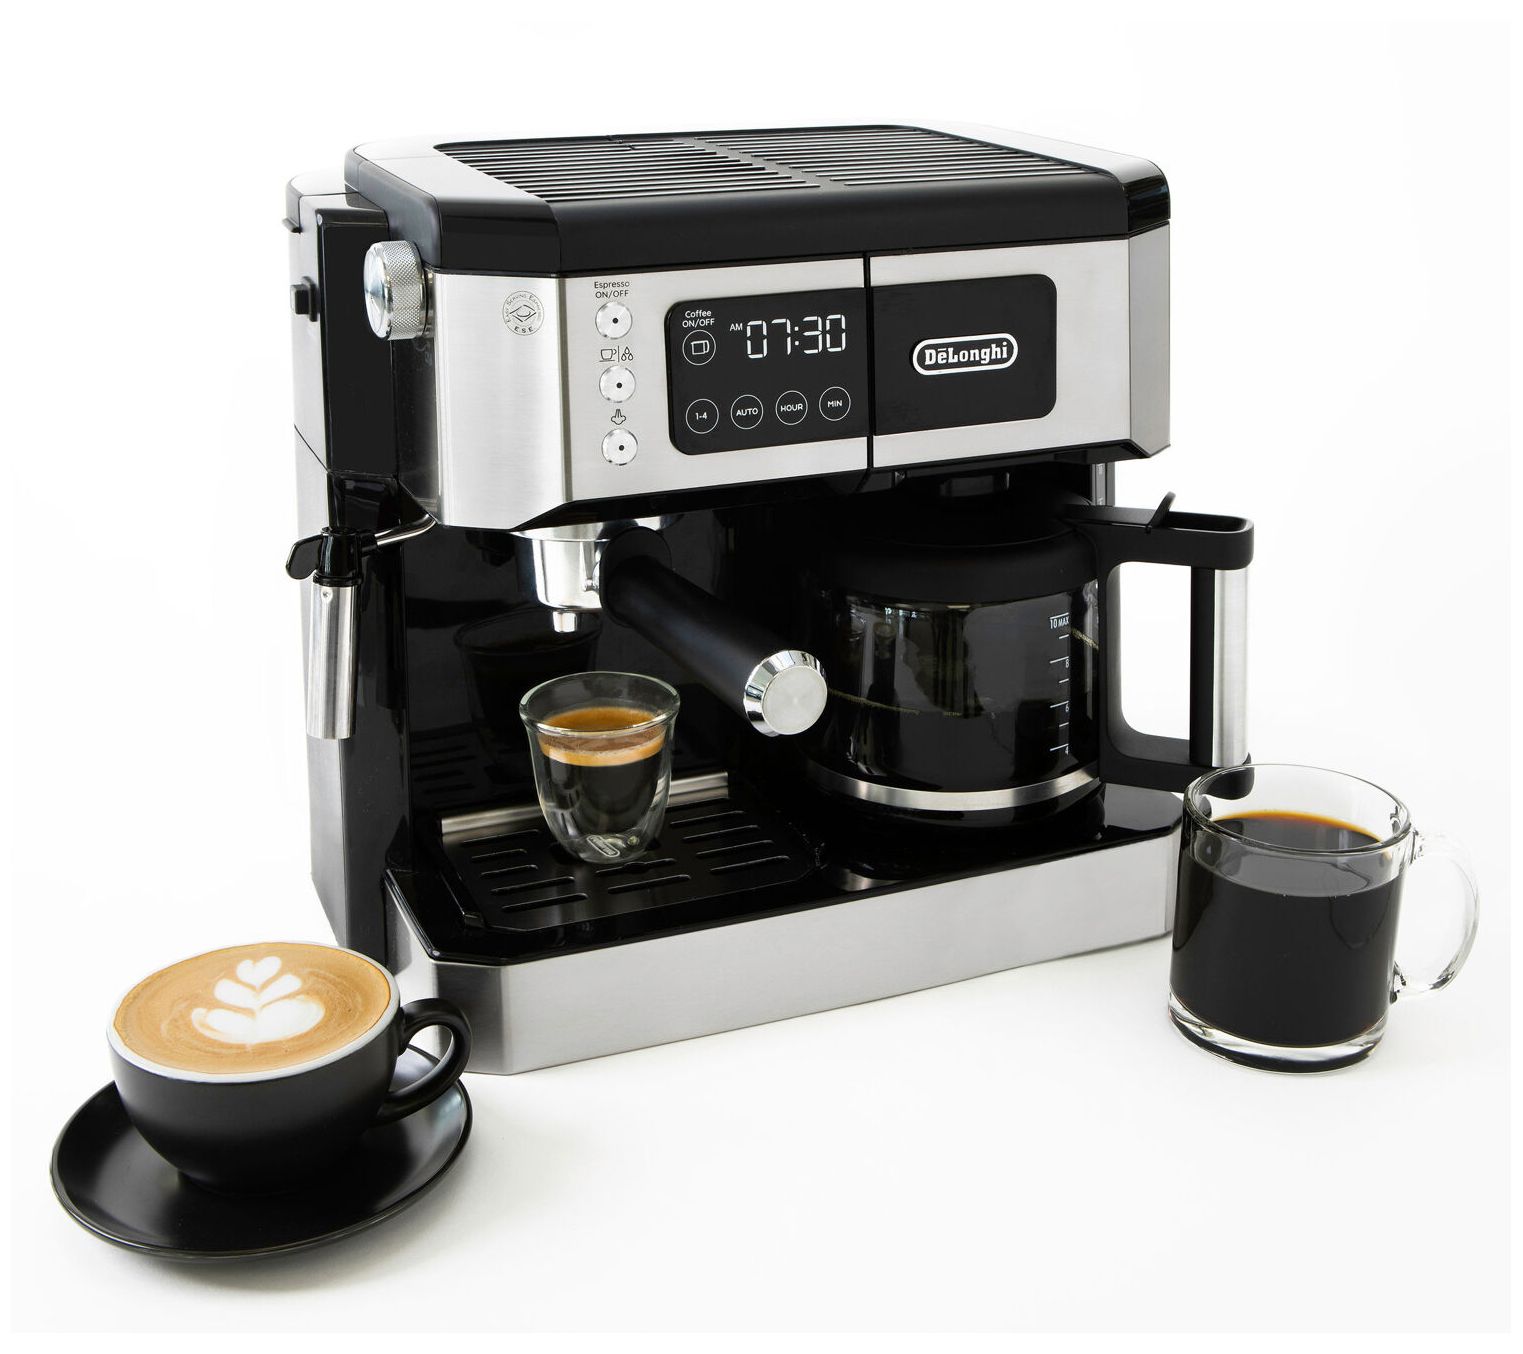 Buy Giava Coffee - De'Longhi Combination Espresso and Drip Coffee Machine